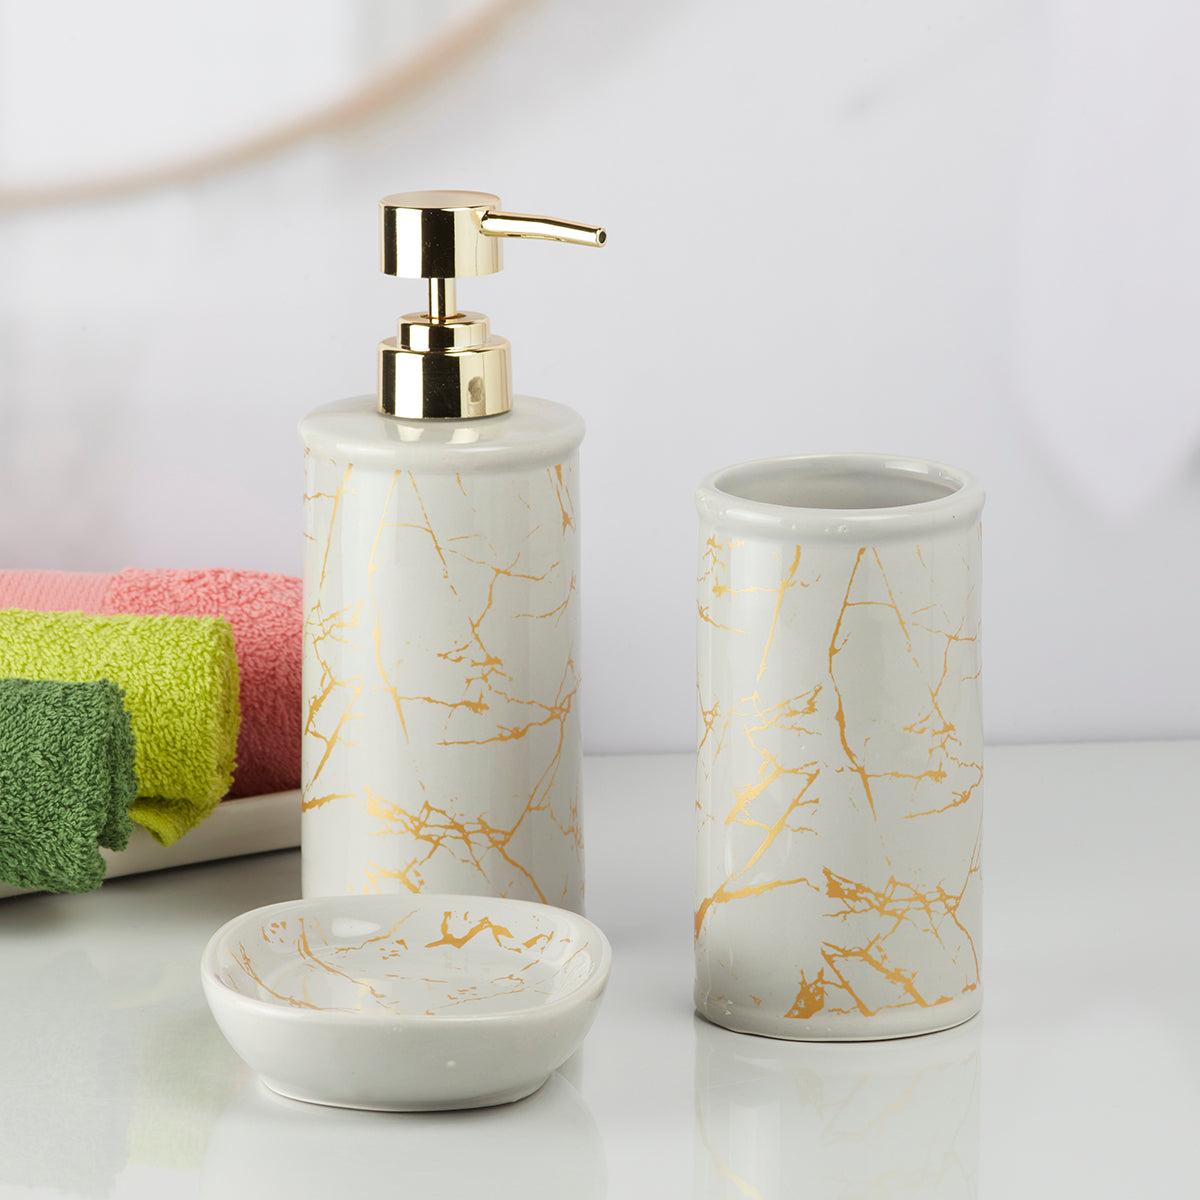 Ceramic Bathroom Accessories Set of 3 Bath Set with Soap Dispenser (9728)